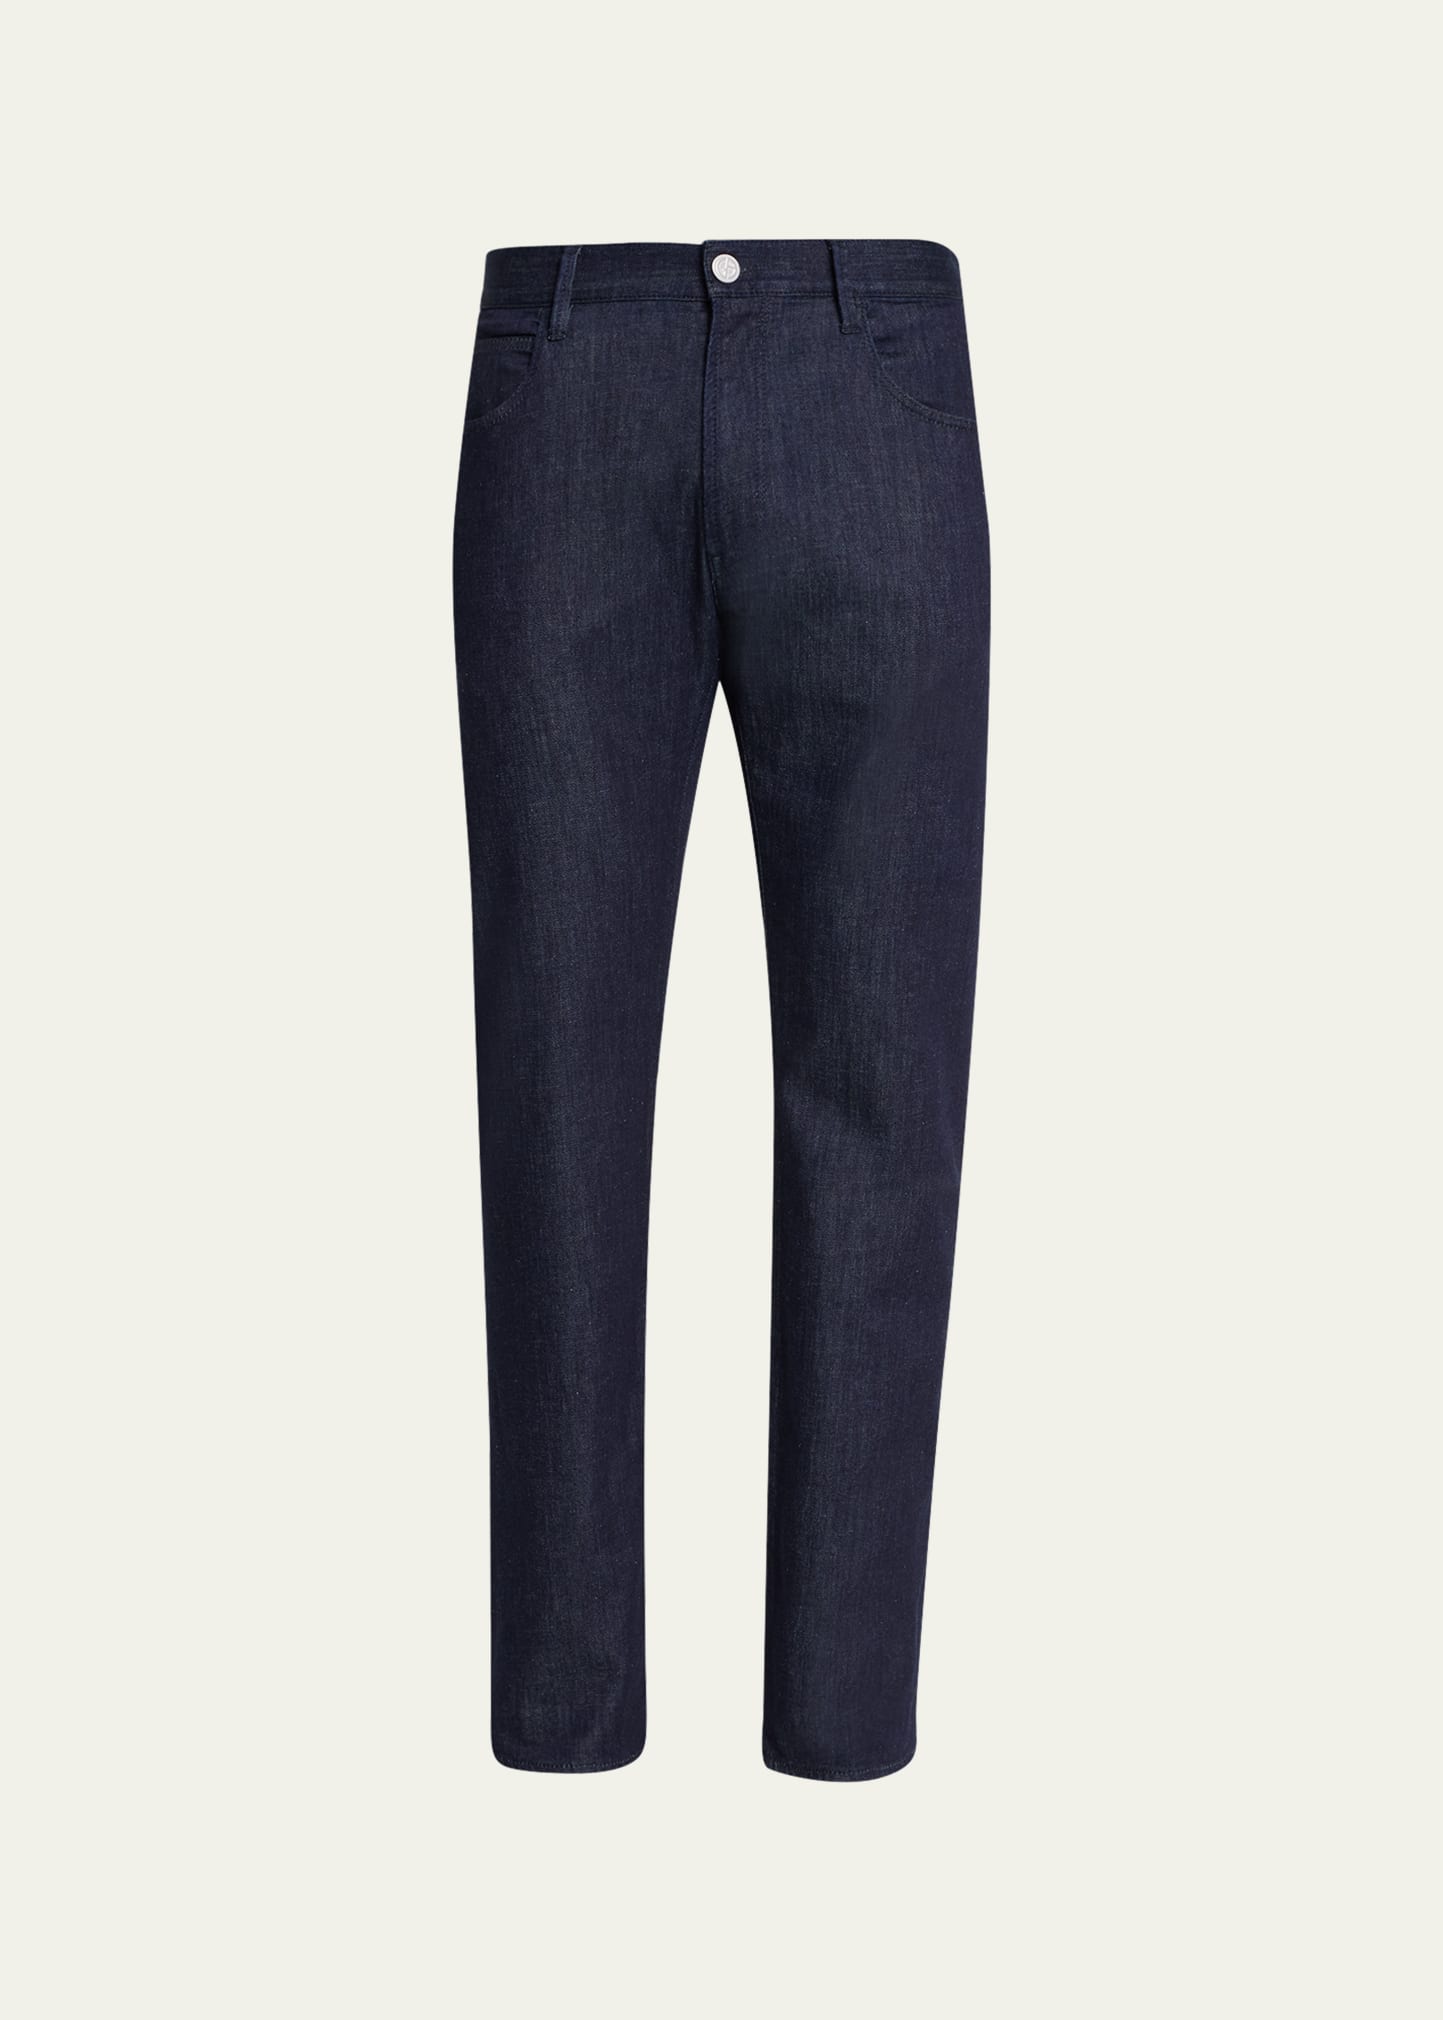 Shop Giorgio Armani Men's Dark Wash Denim Jeans In Solid Dark Grey